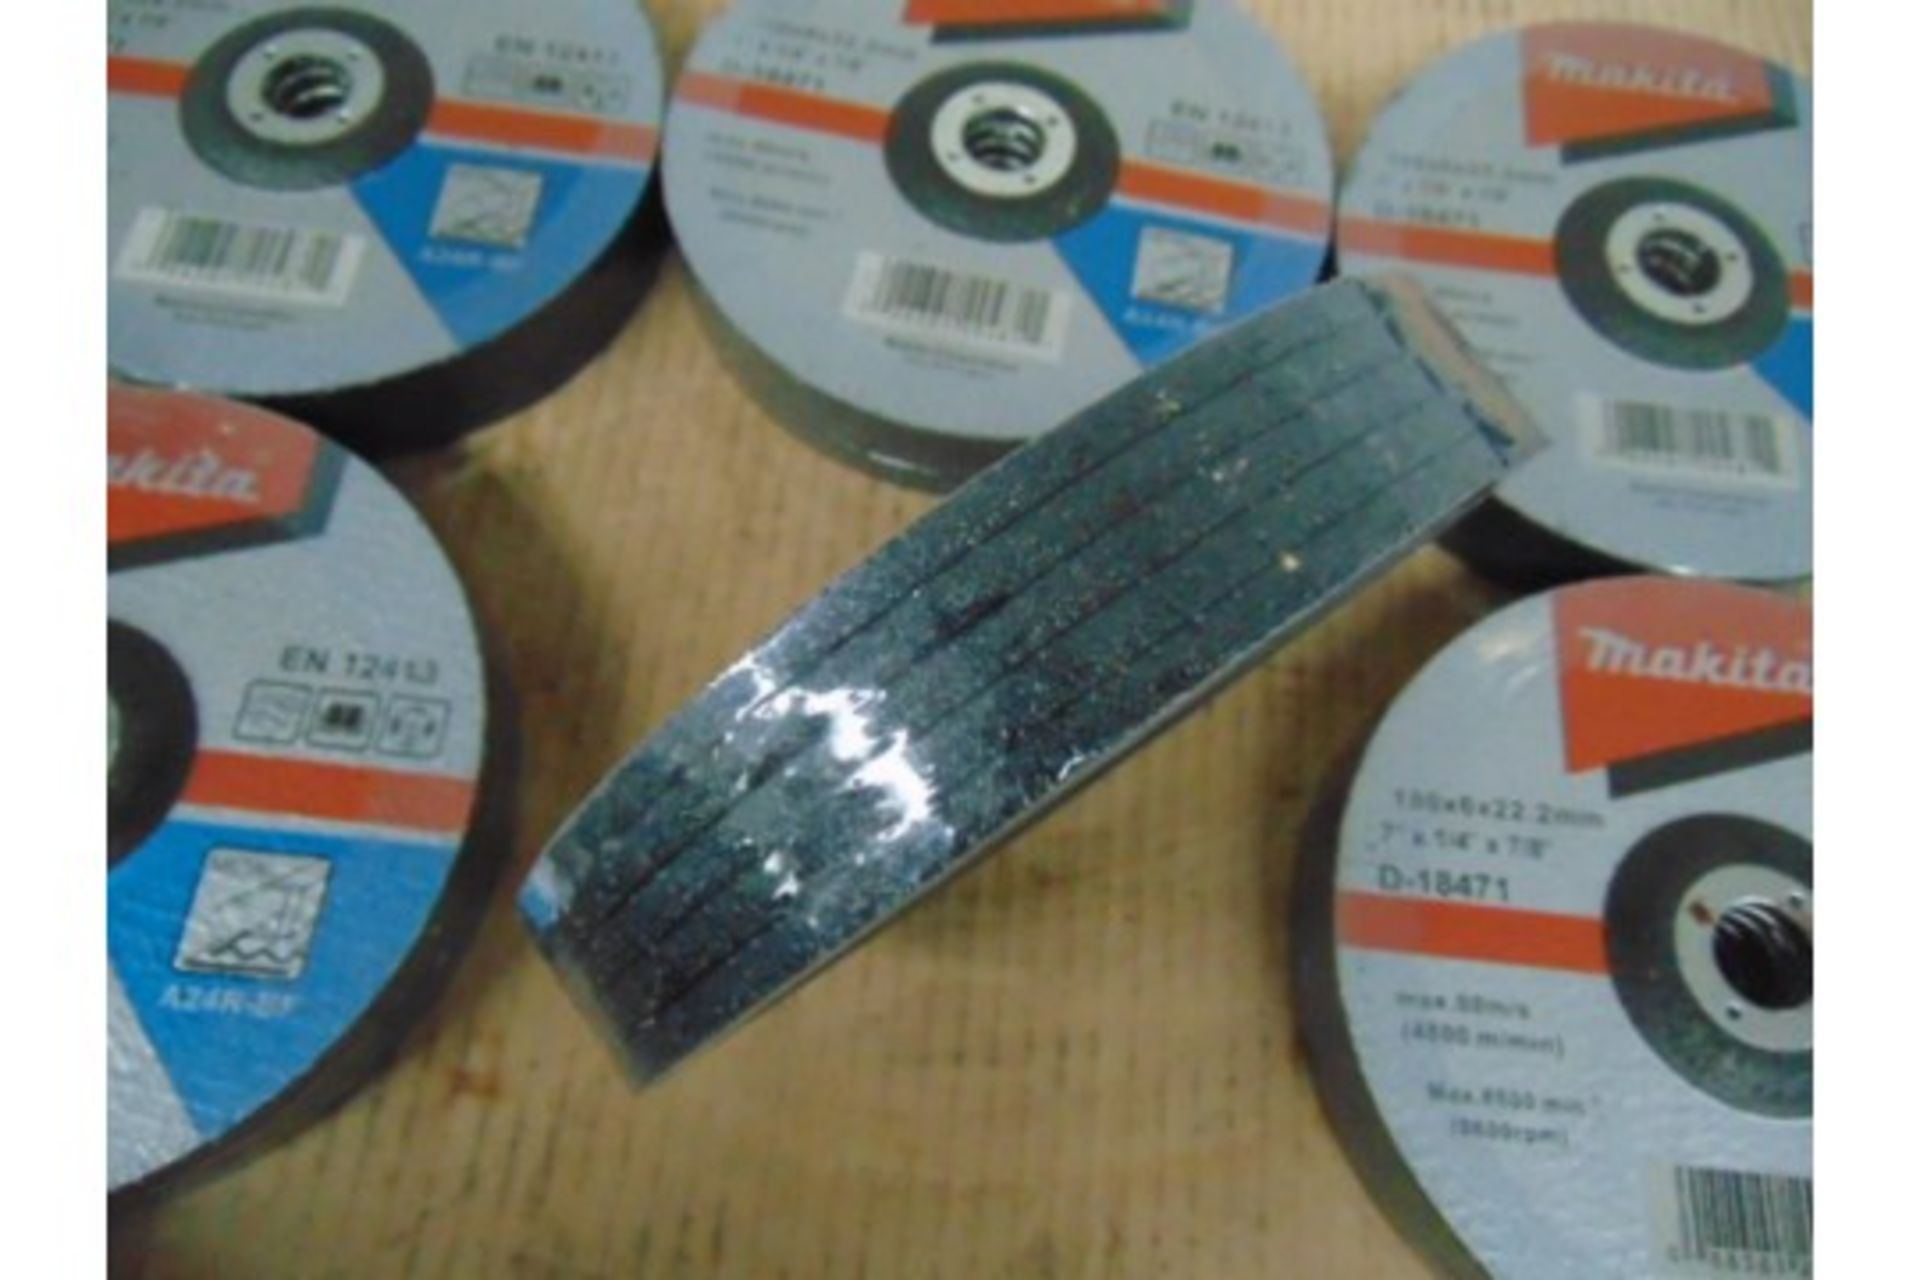 60 x Makita Metal Grinding Disc 180 x 6 x 22.2 A24R-BF D-18471 - Bild 4 aus 4